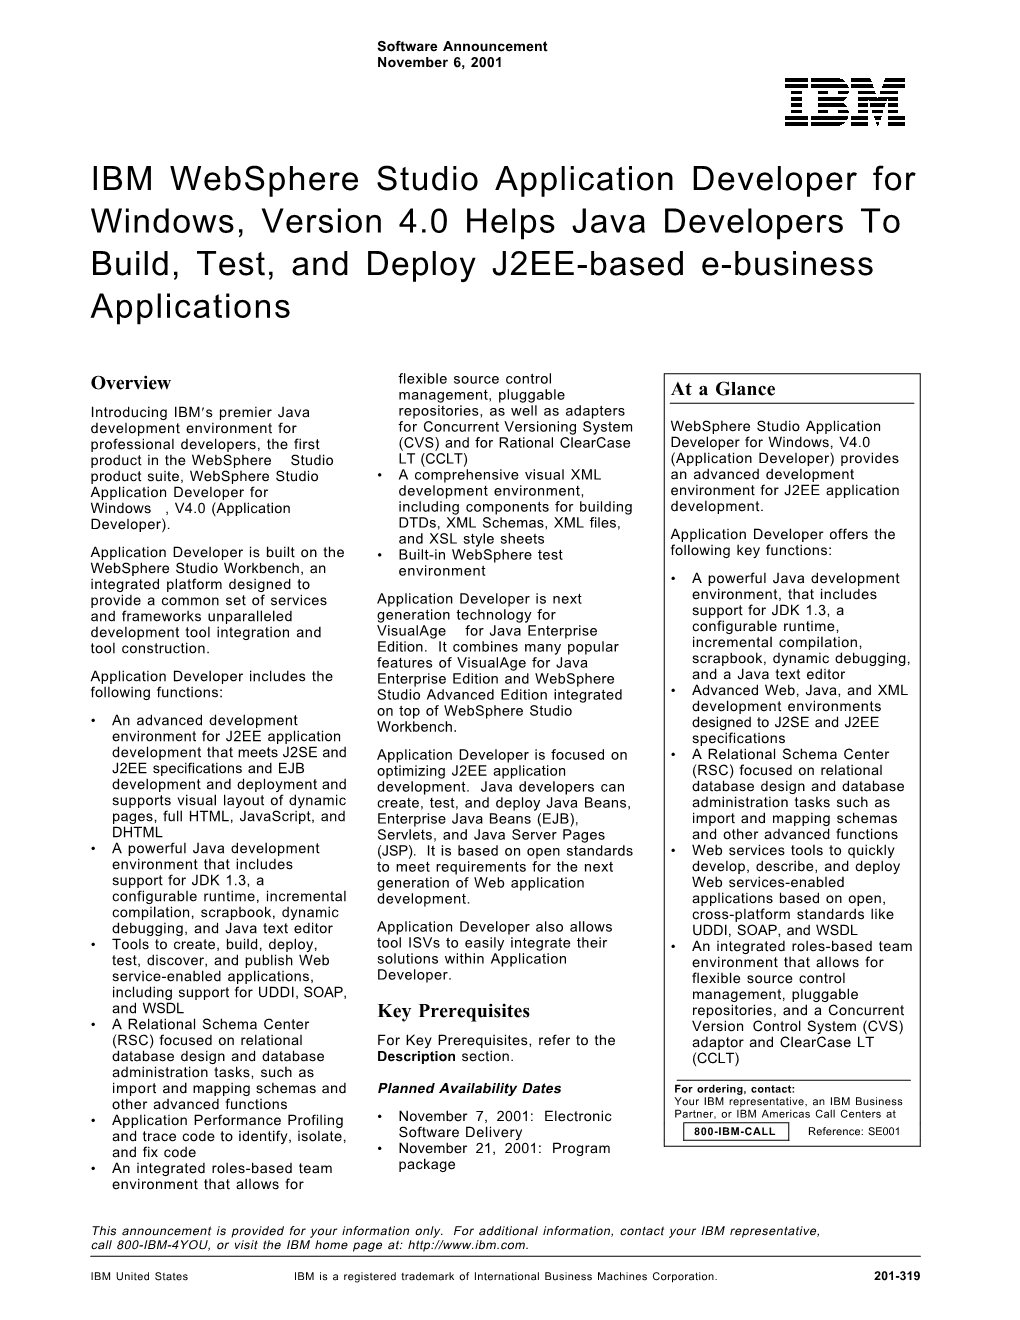 IBM Websphere Studio Application Developer for Windows, Version 4.0 Helps Java Developers to Build, Test, and Deploy J2EE-Based E-Business Applications